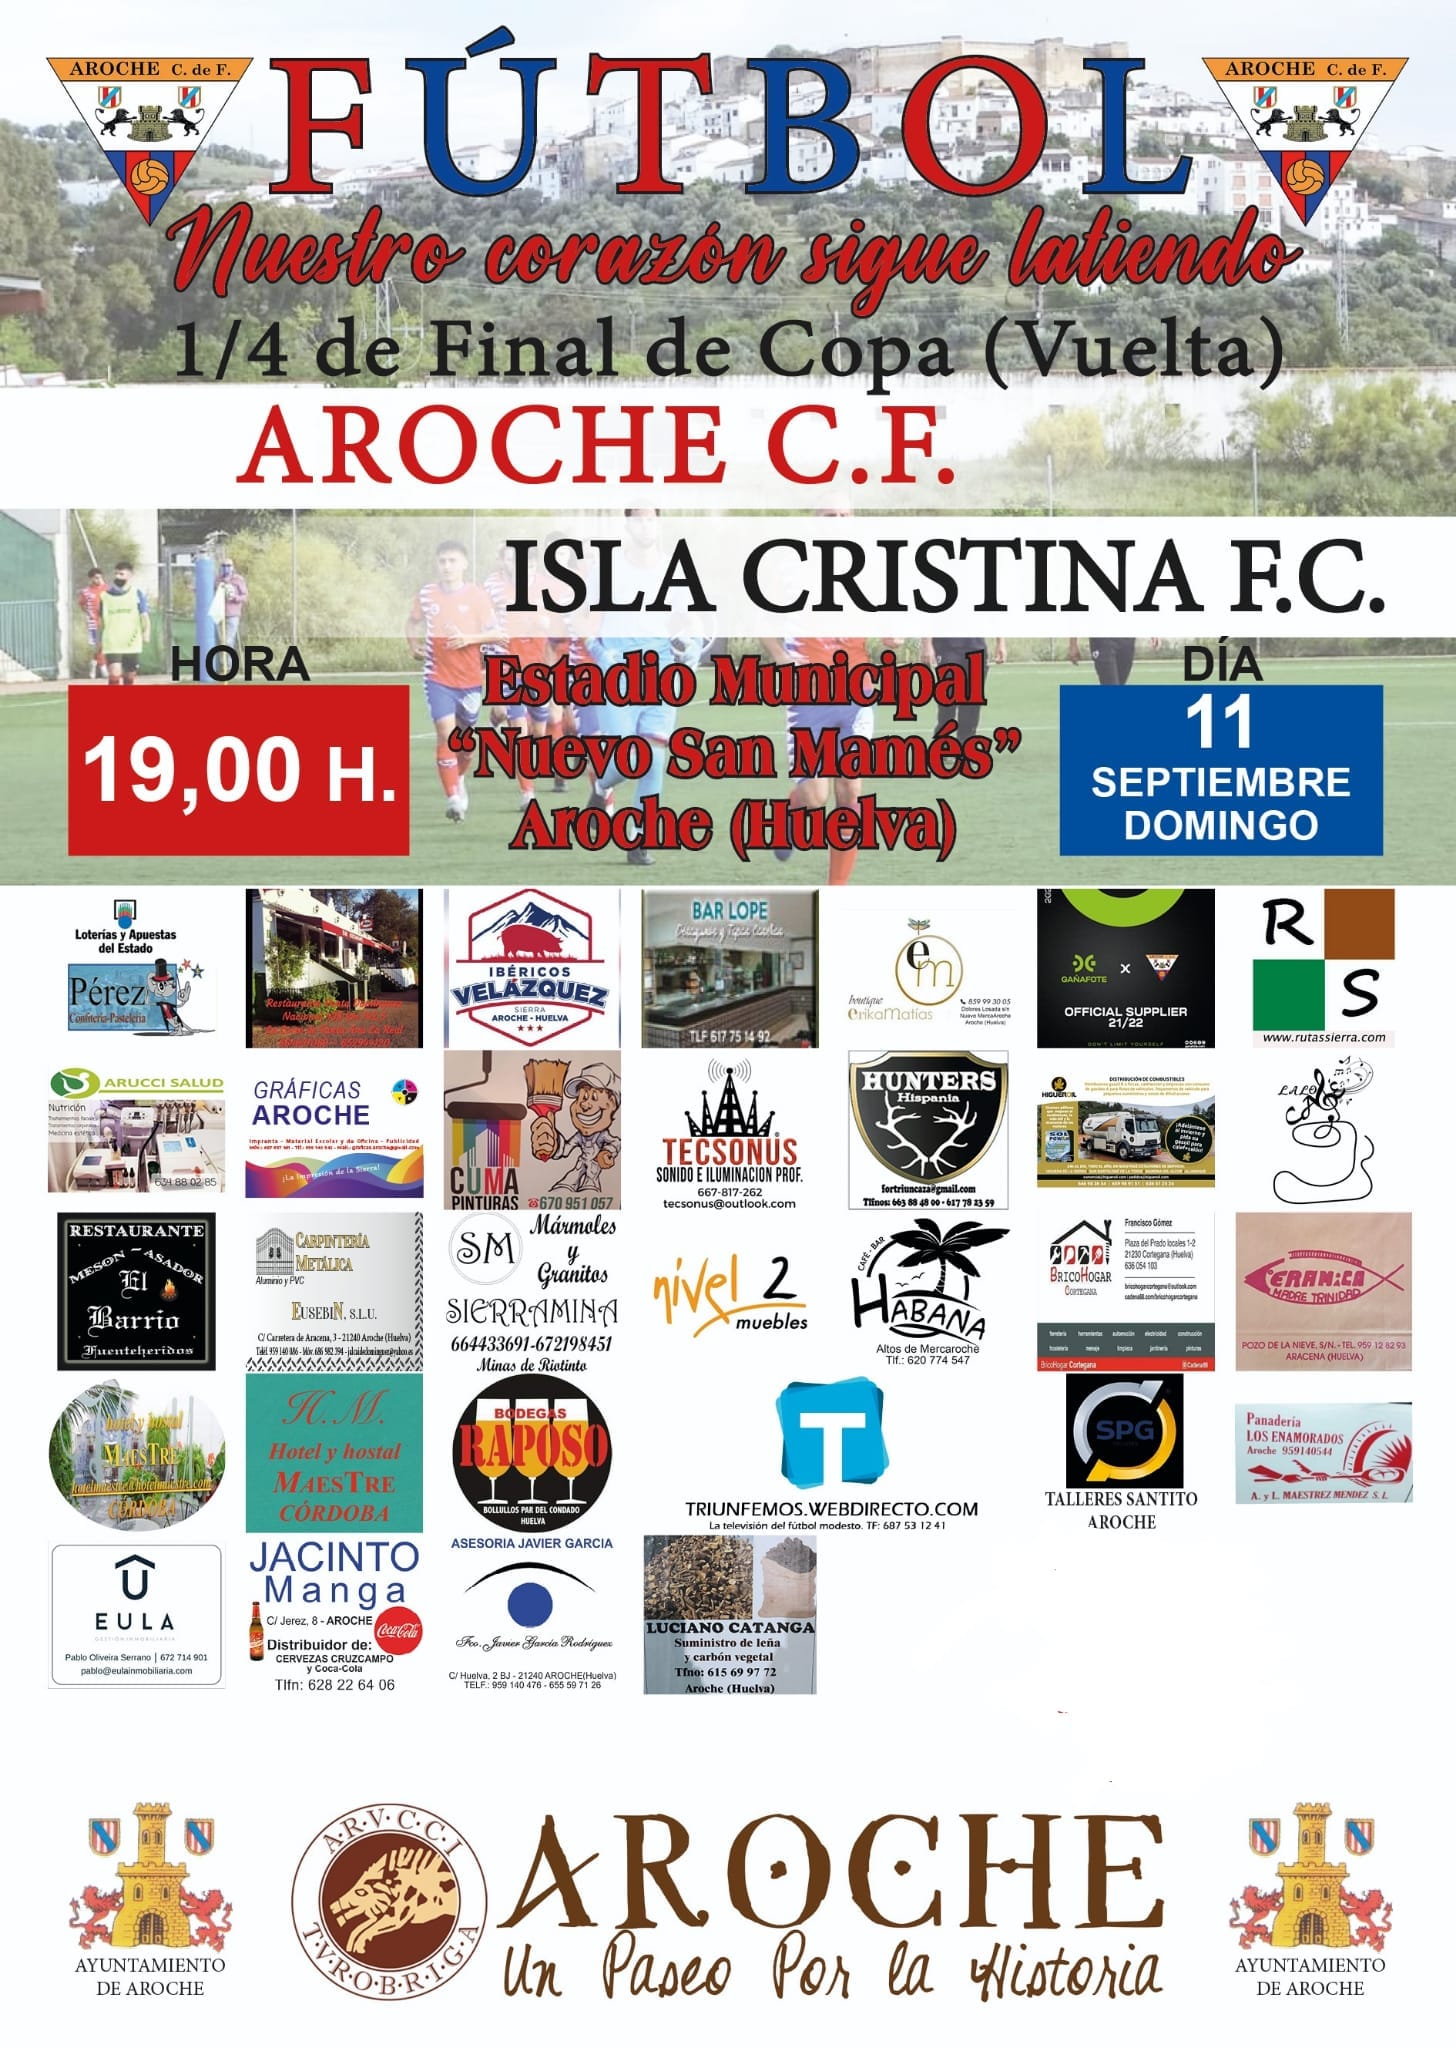 El Isla Cristina afronta una final contra el Aroche